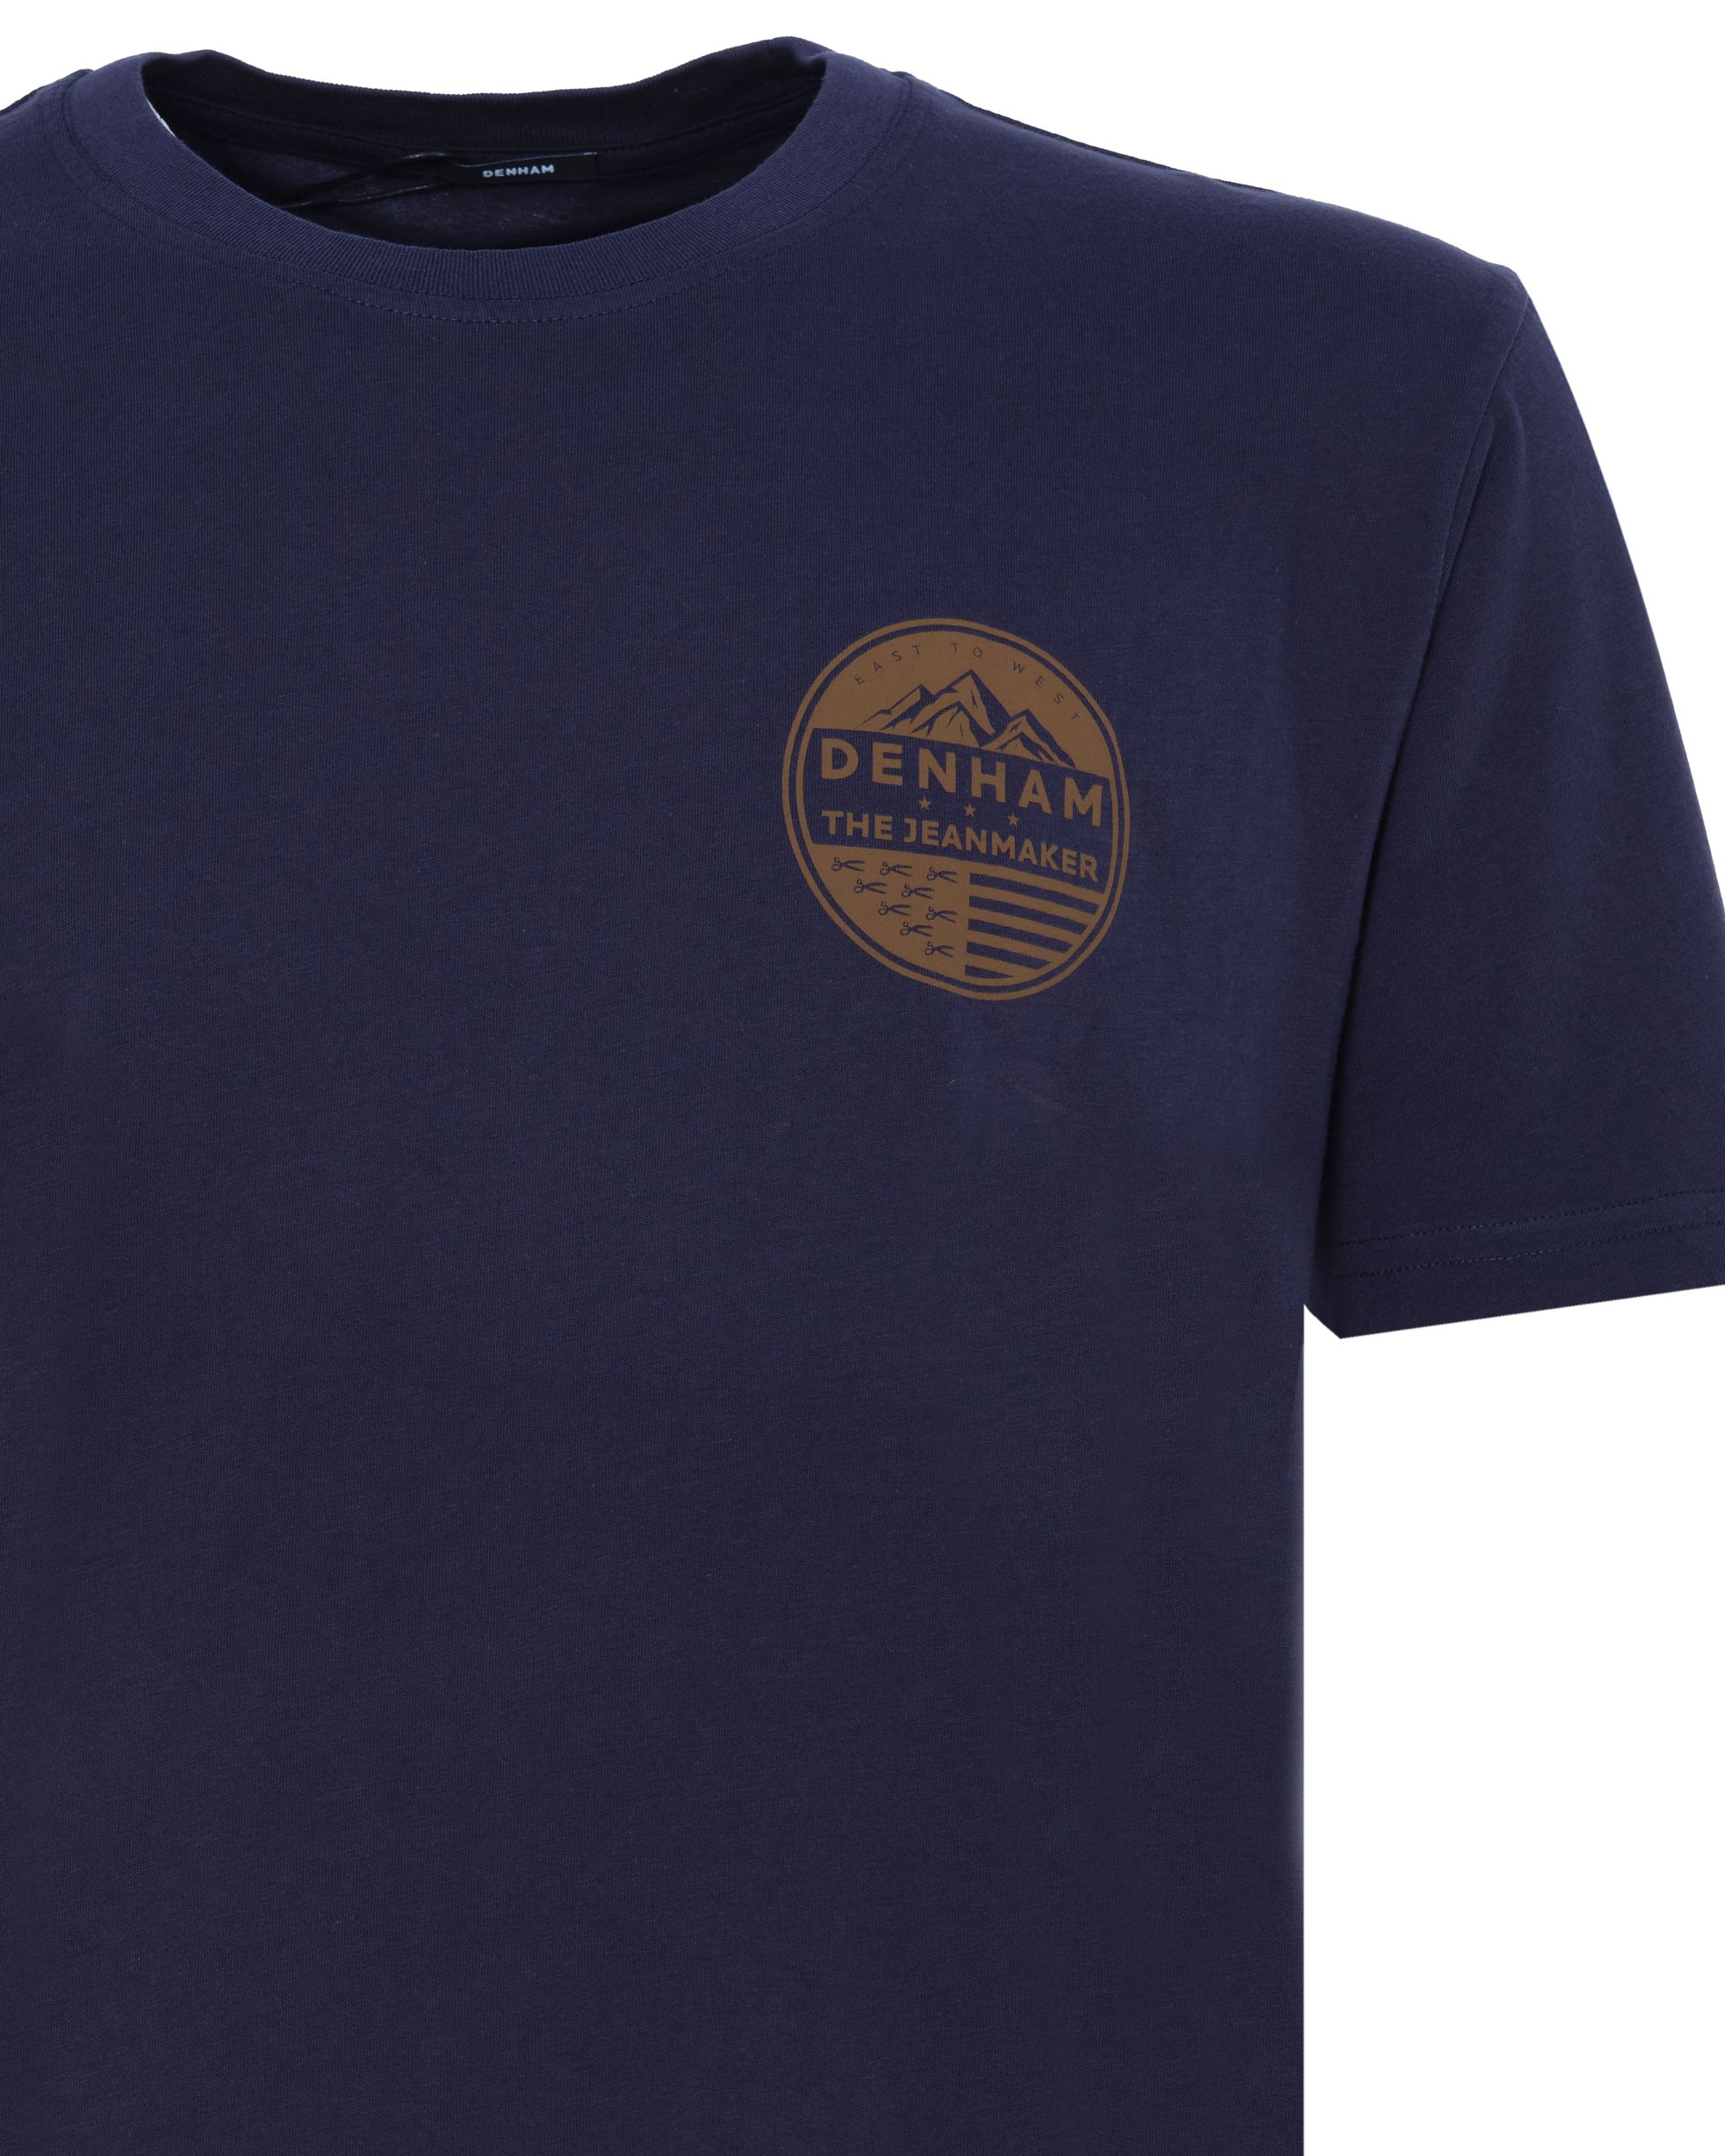 DENHAM Avon T-shirt KM Zwart 081345-001-L